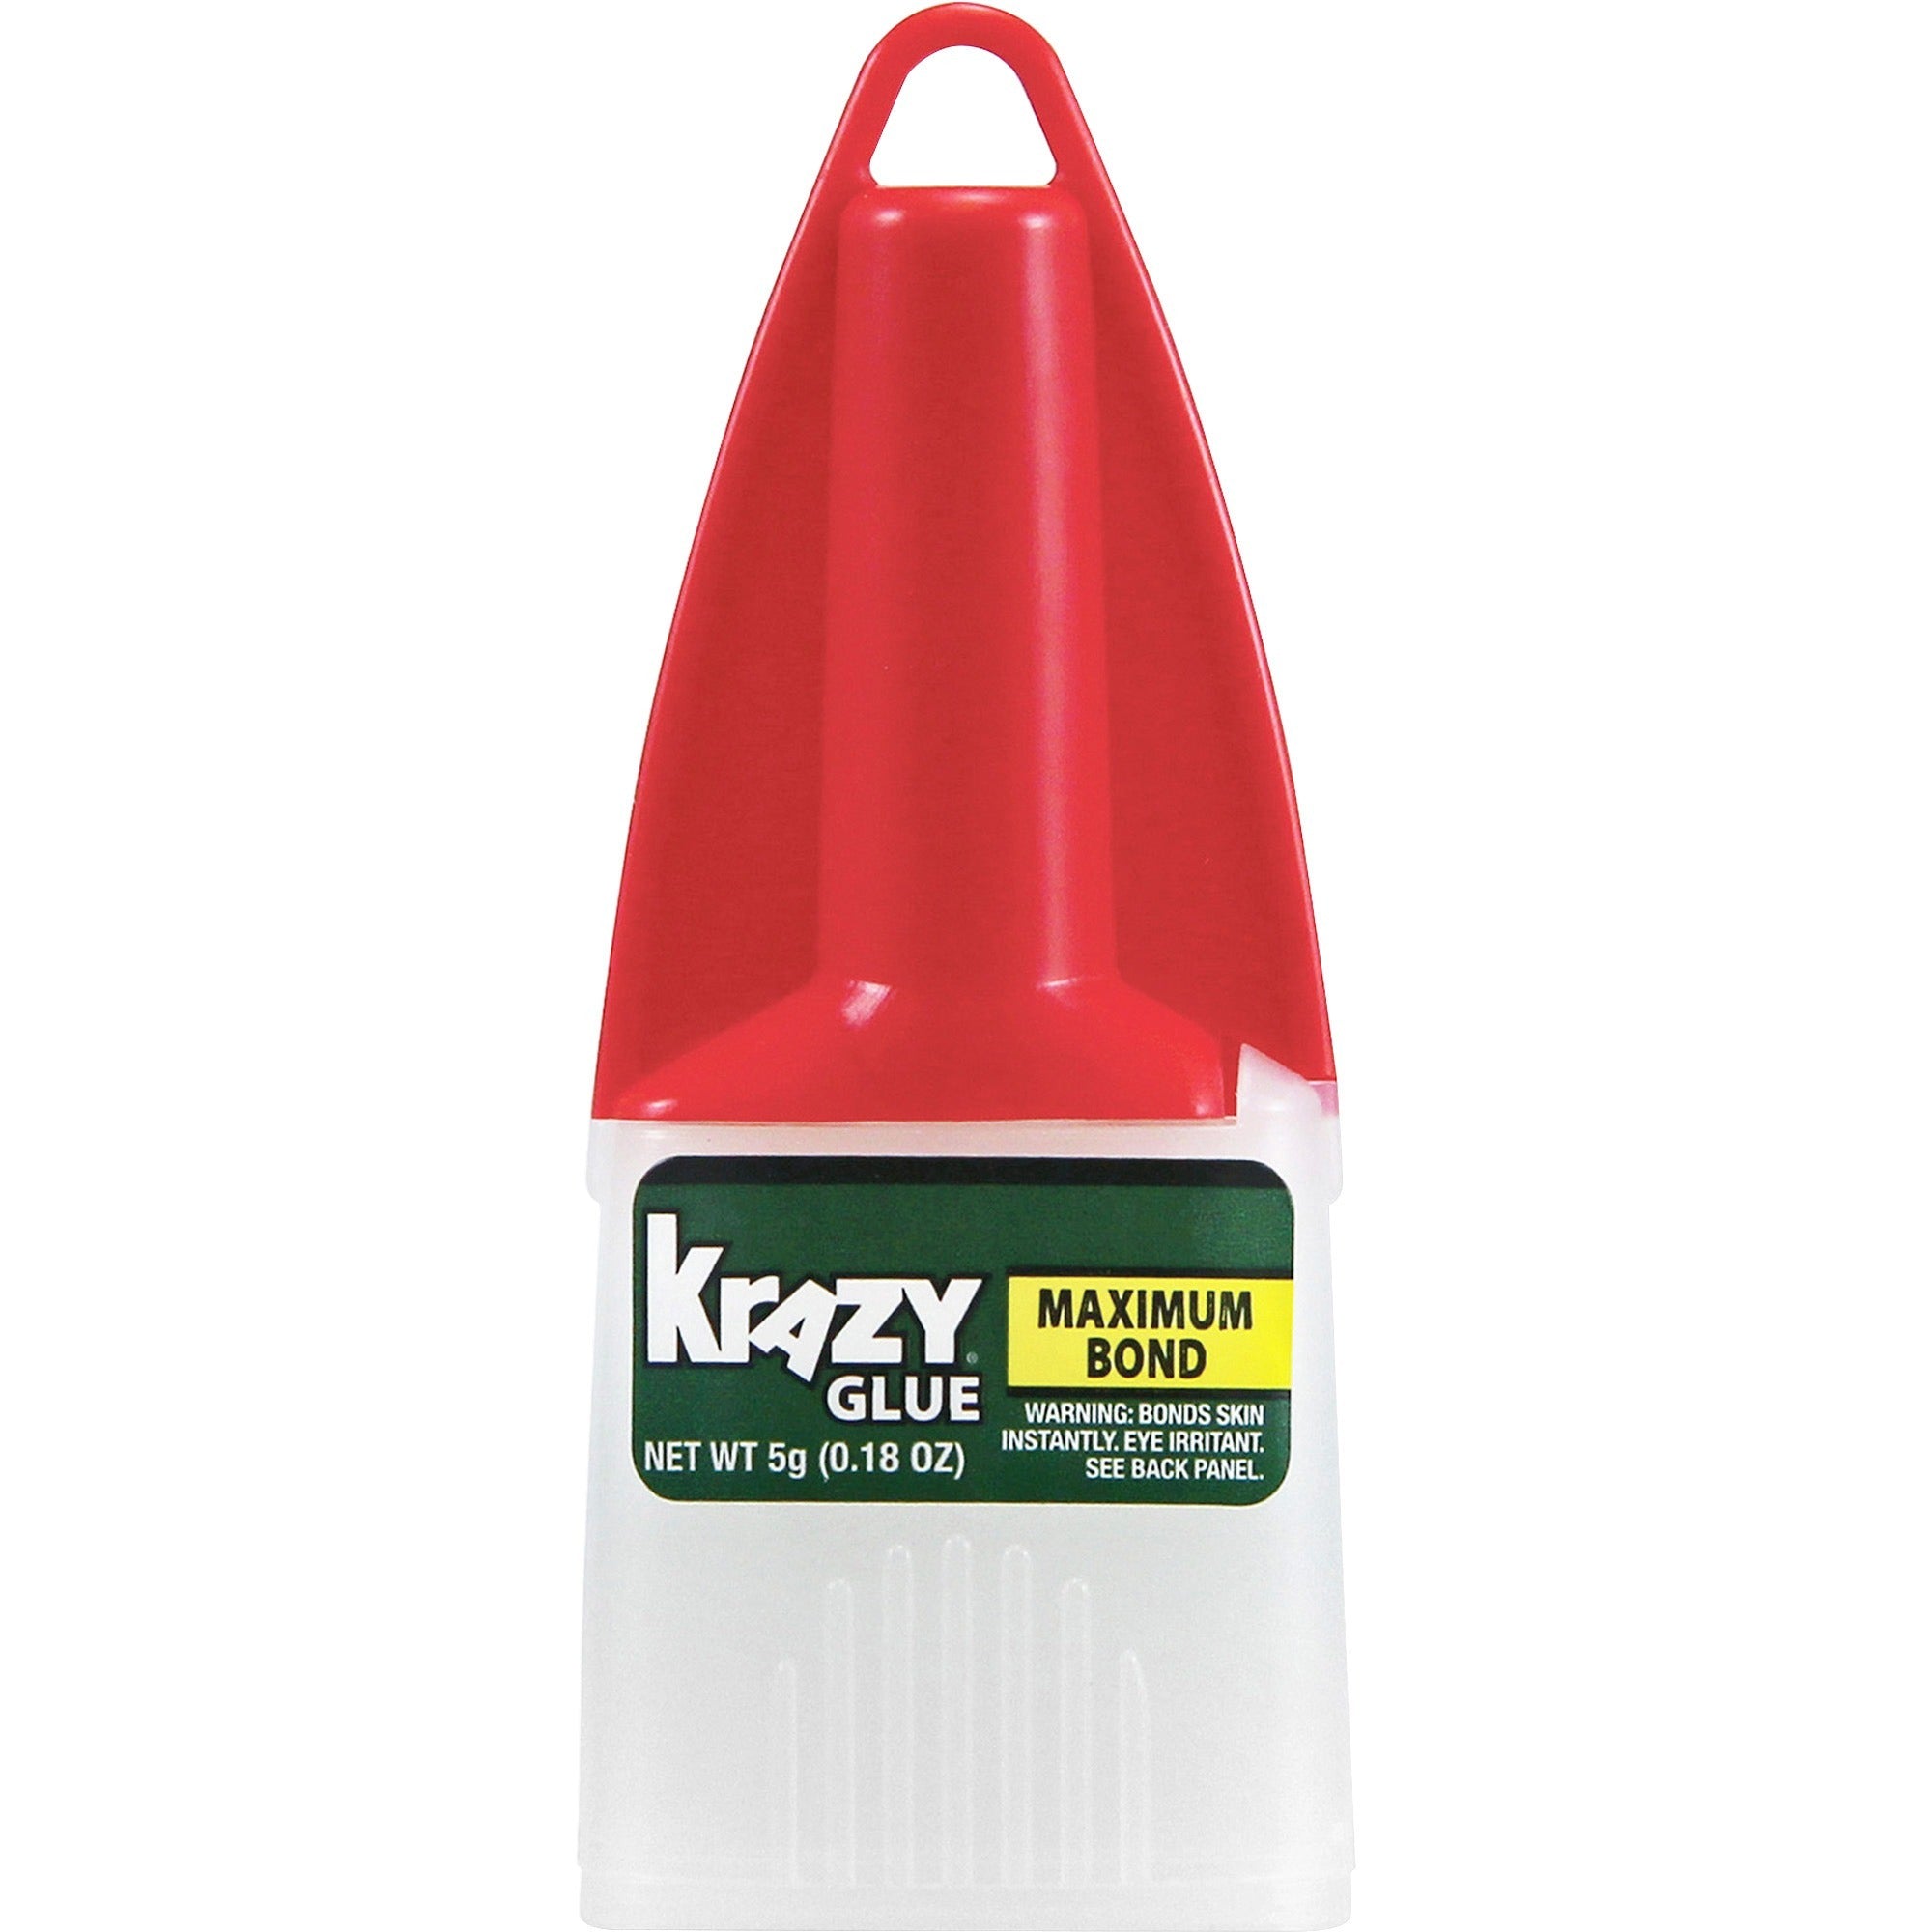 Maximum Bond Krazy Glue, 0.18 oz. Extra Strong, Durable, Precision Tip, Sold as 1 Each - 1